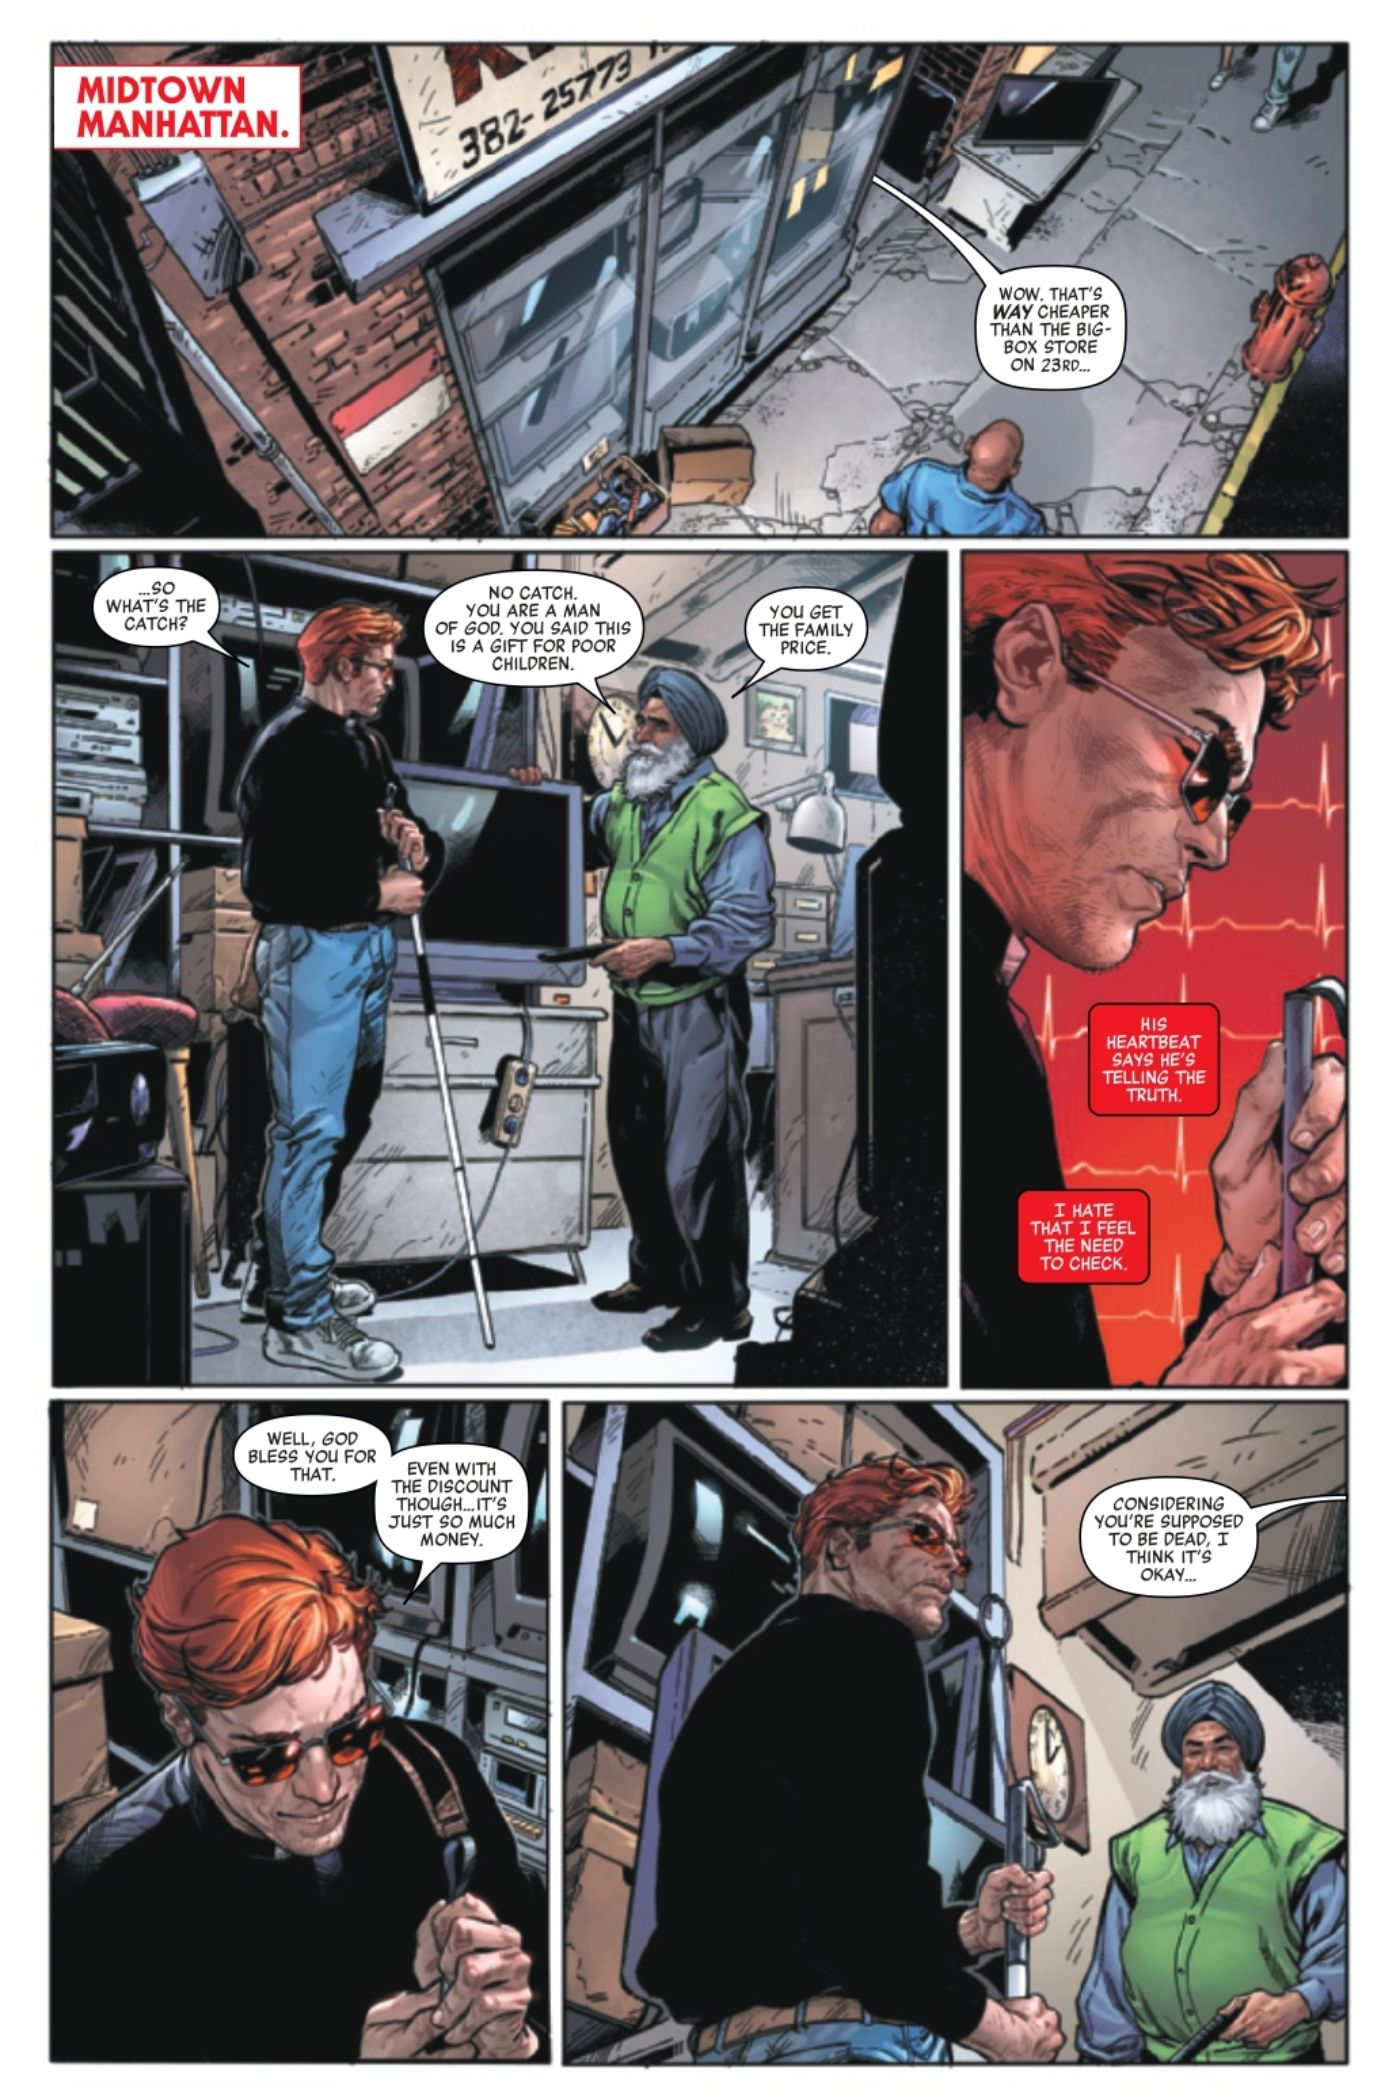 Daredevil #5 Preview page 3.